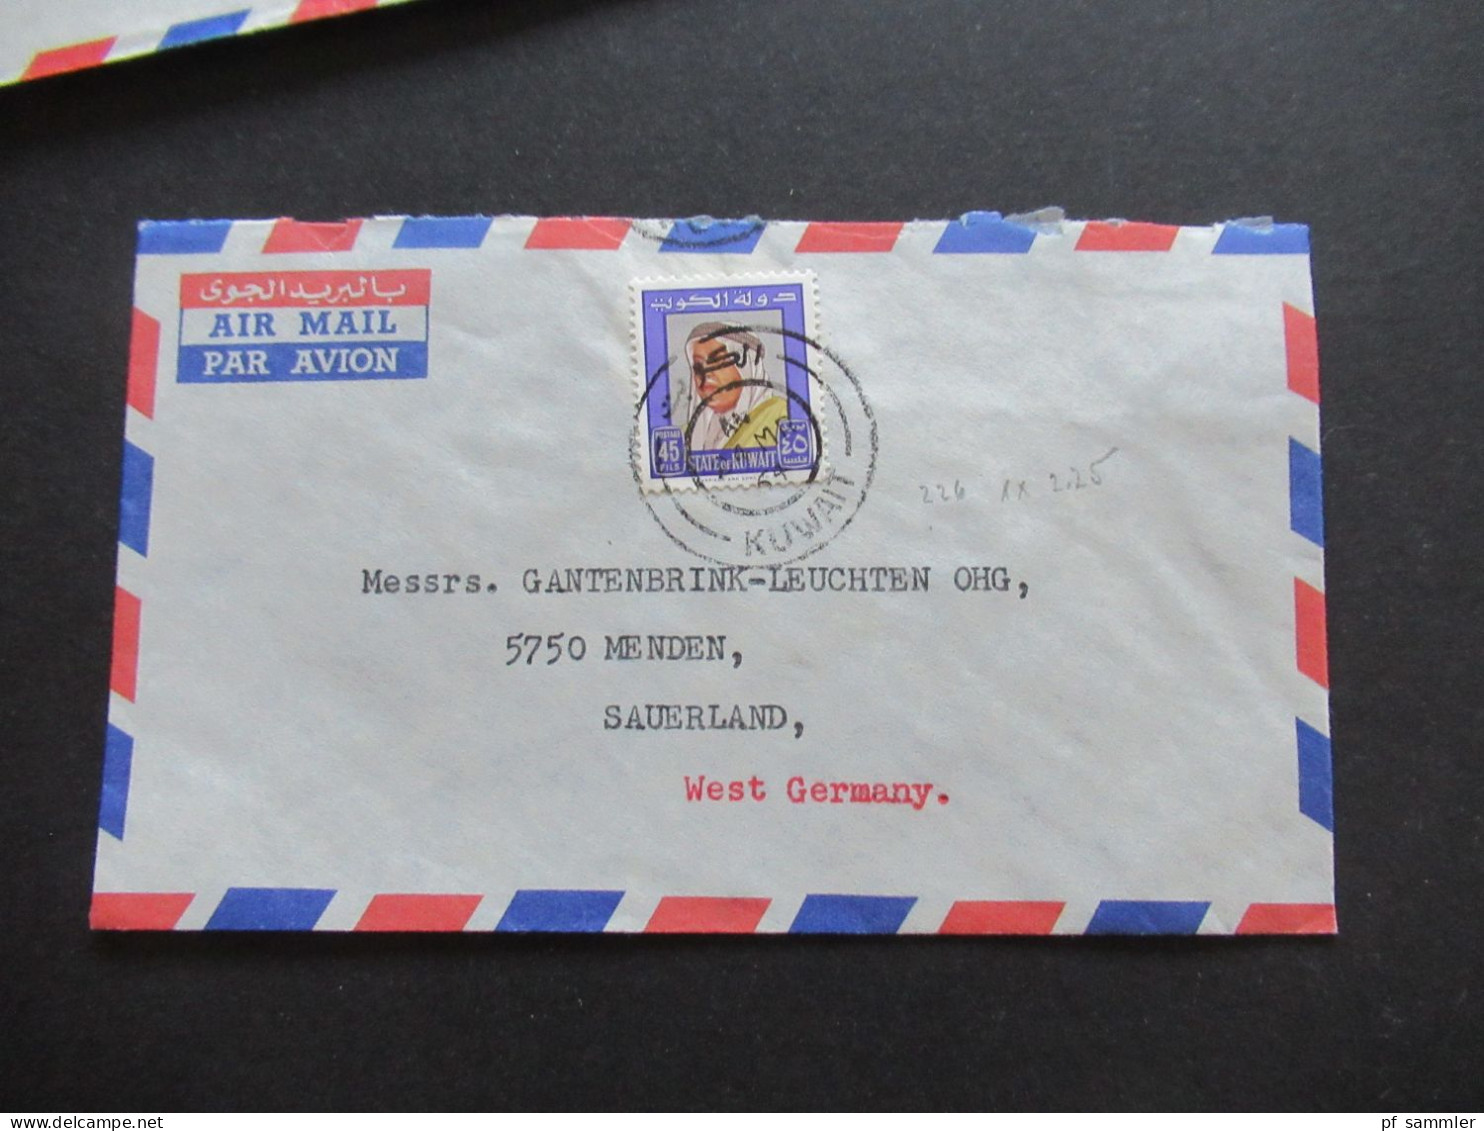 Asien Kuwait 1964 8 Belege Air Mail / Luftpost auch Firmenumschläge Electrical Contracting Company Nafisi & Farouki